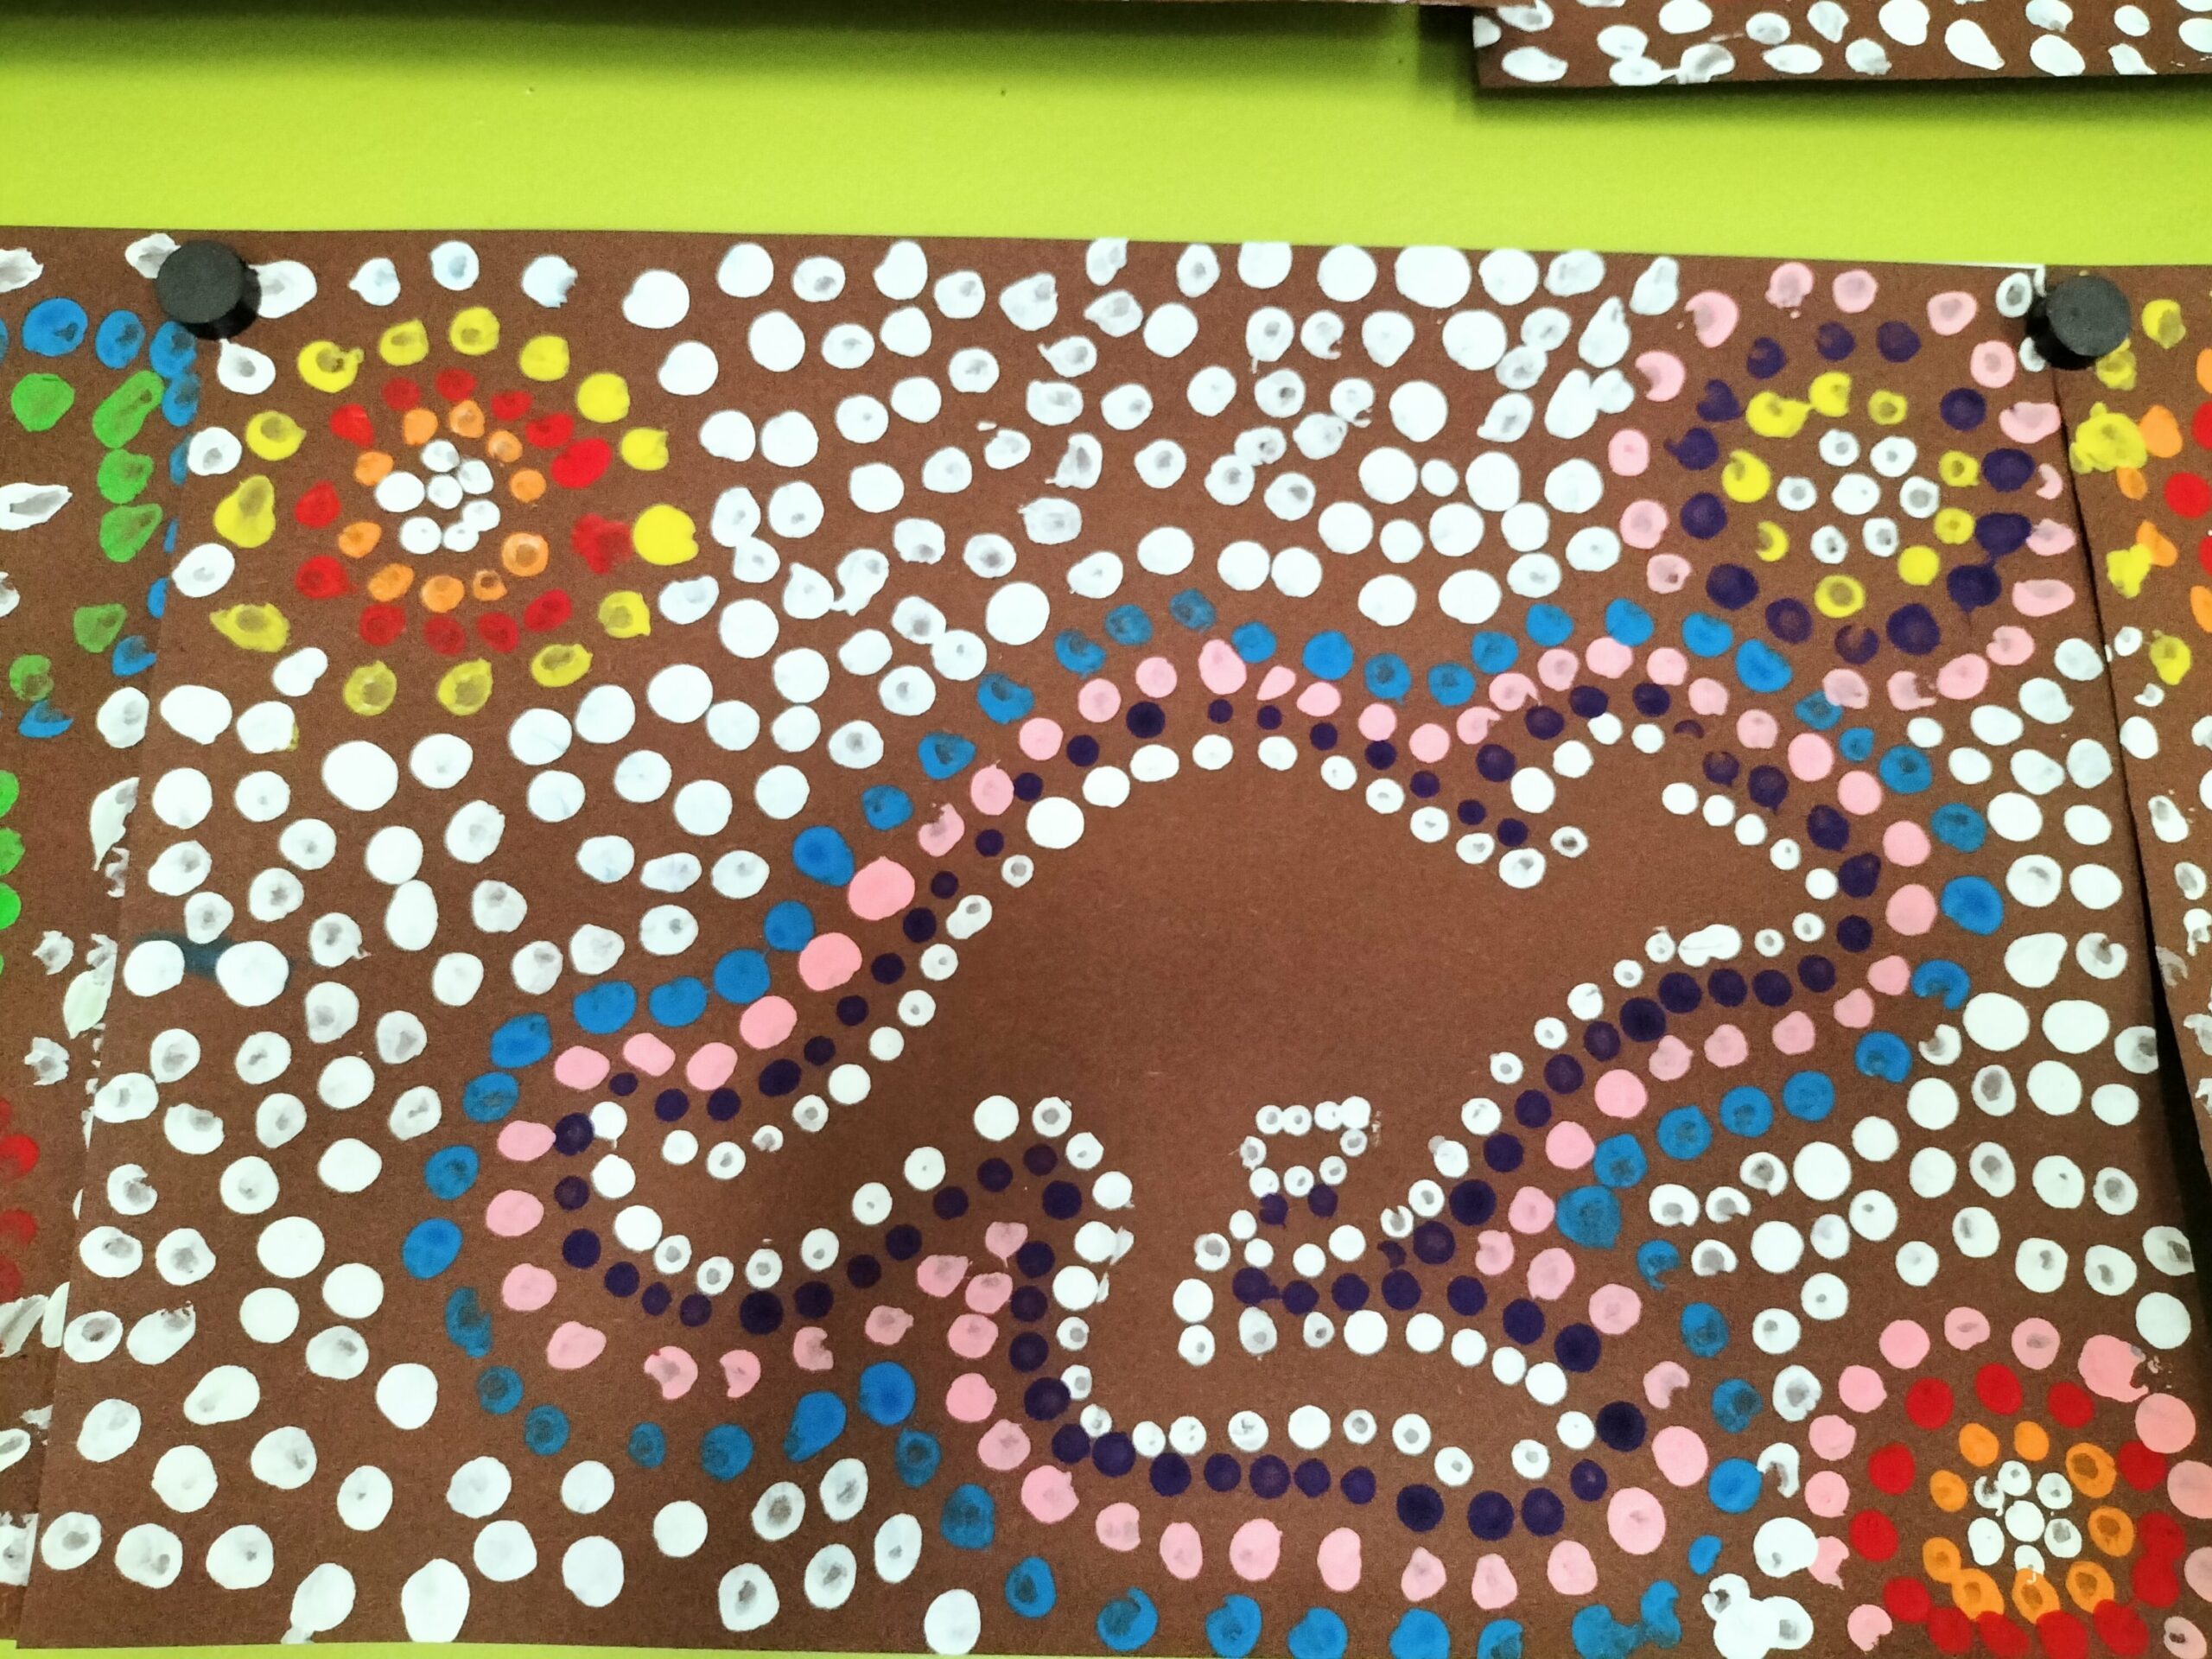 Art aborigène